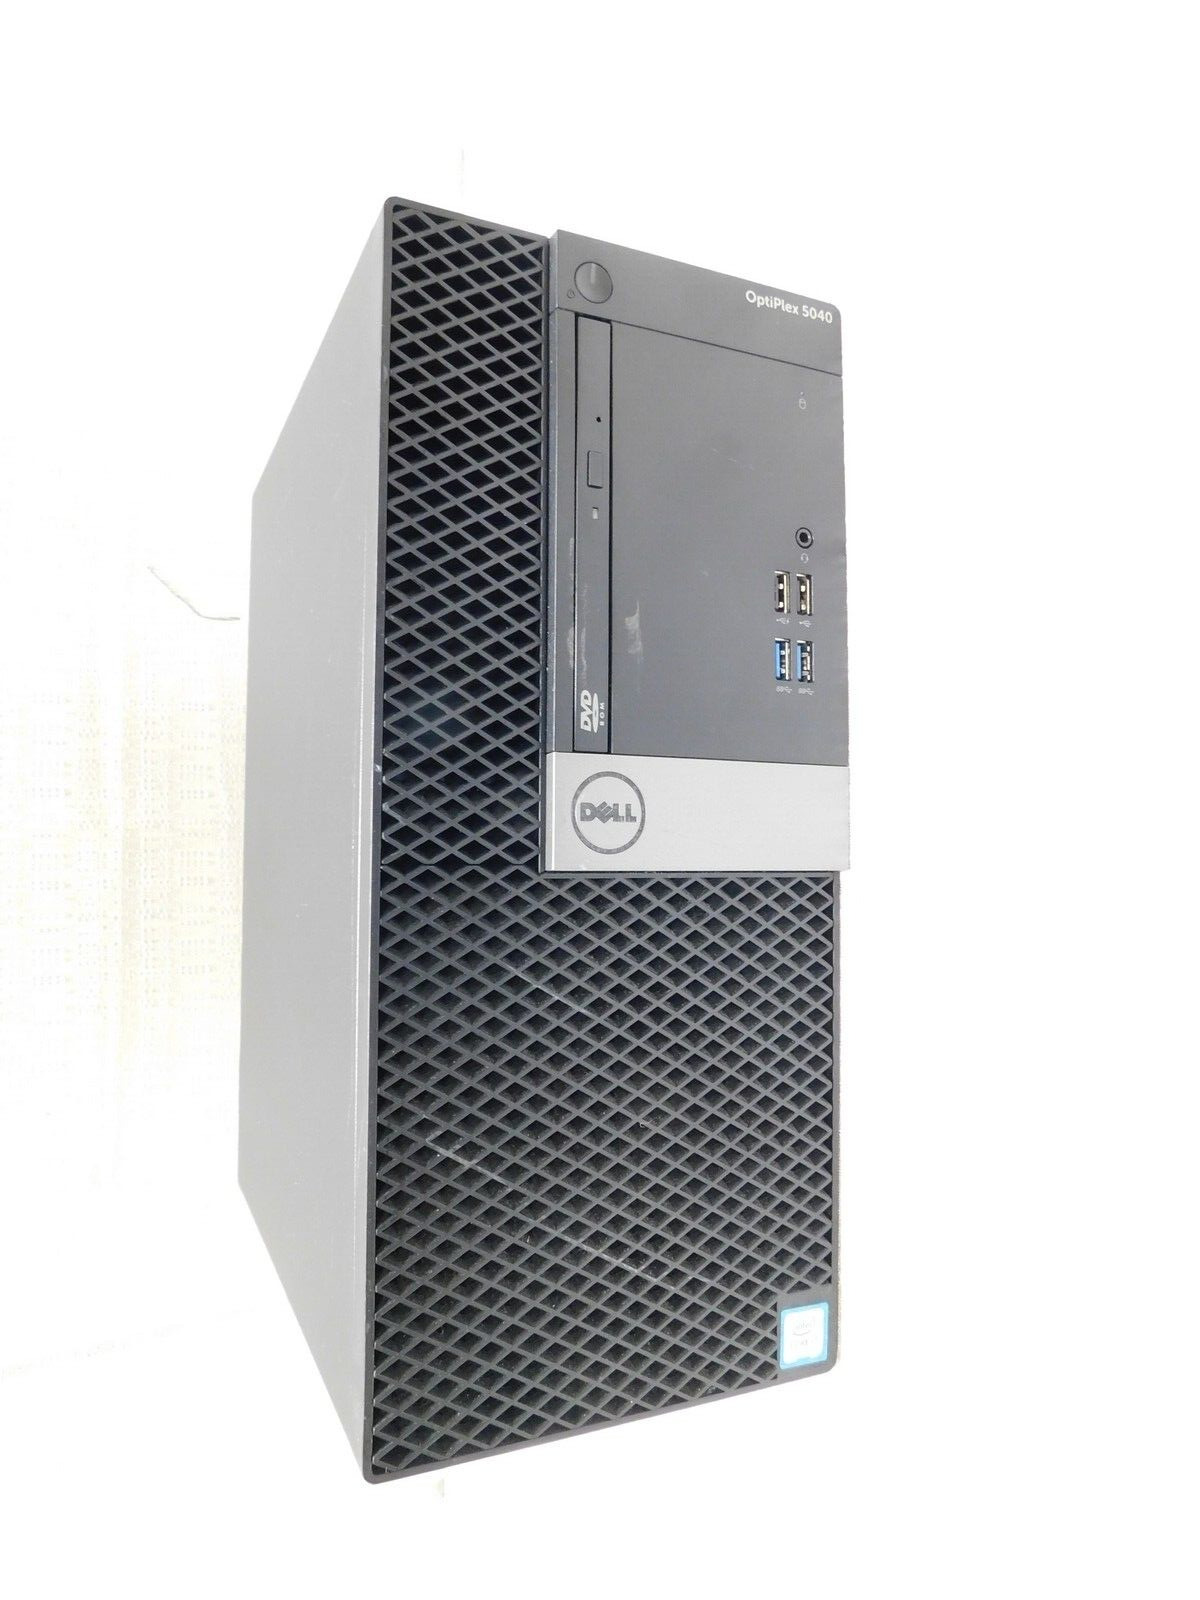 Dell OptiPlex 5040 MT | Intel Core i7-6700 @ 3.40GHz | 8GB RAM | No HDD/OS